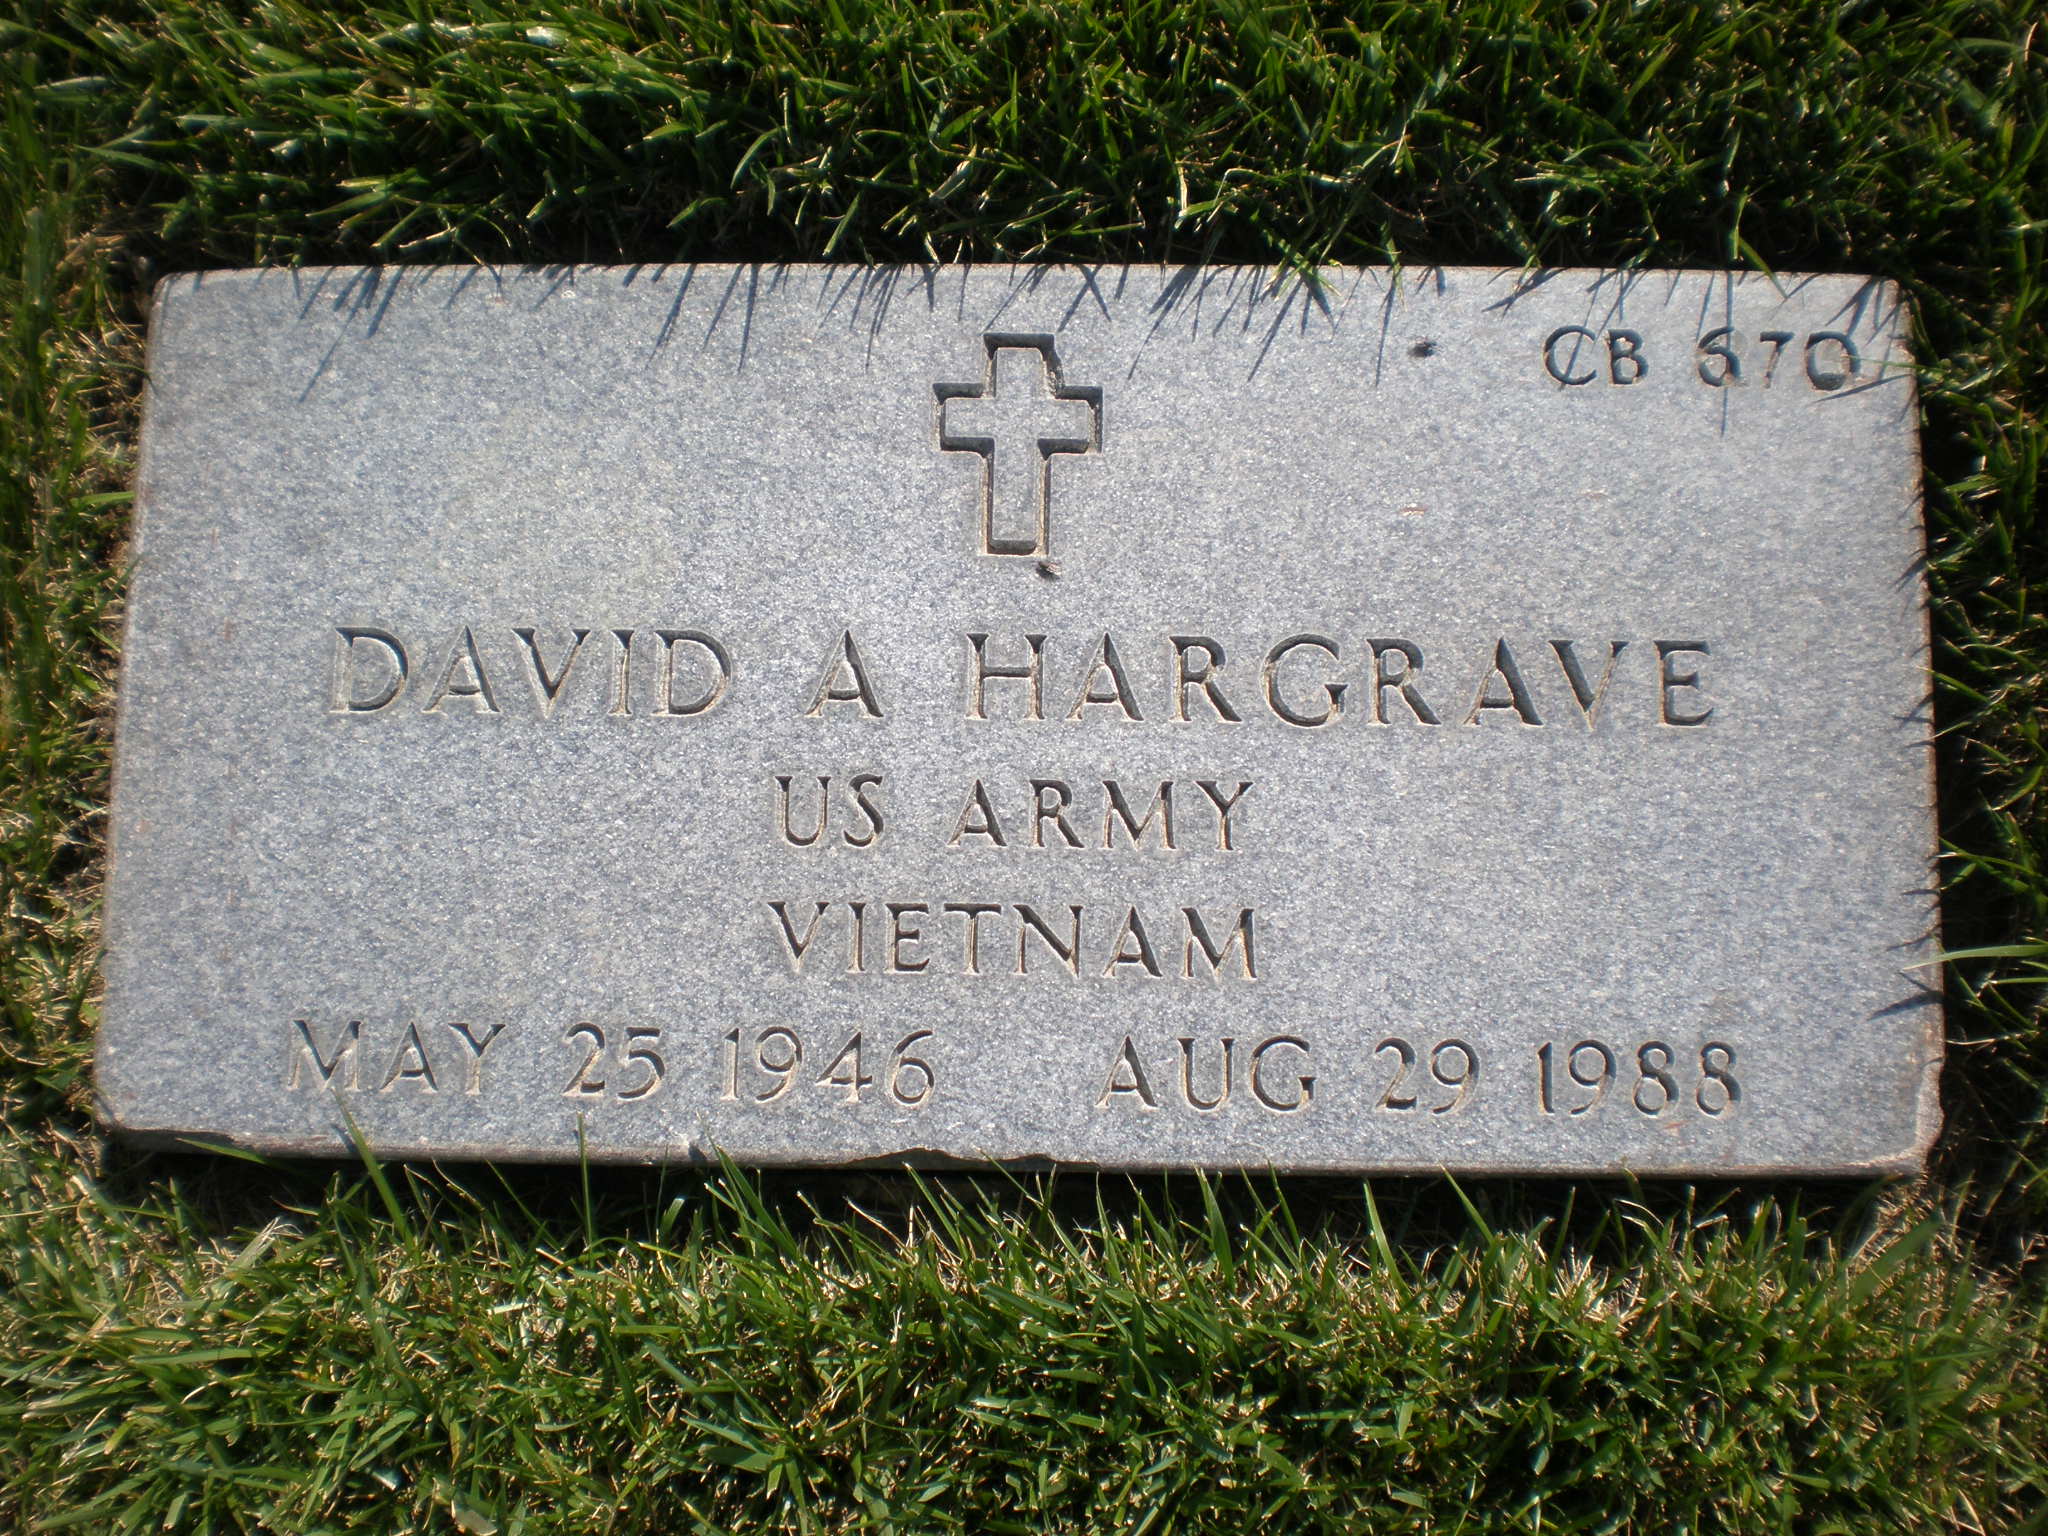 David A. Hargrave grave marker